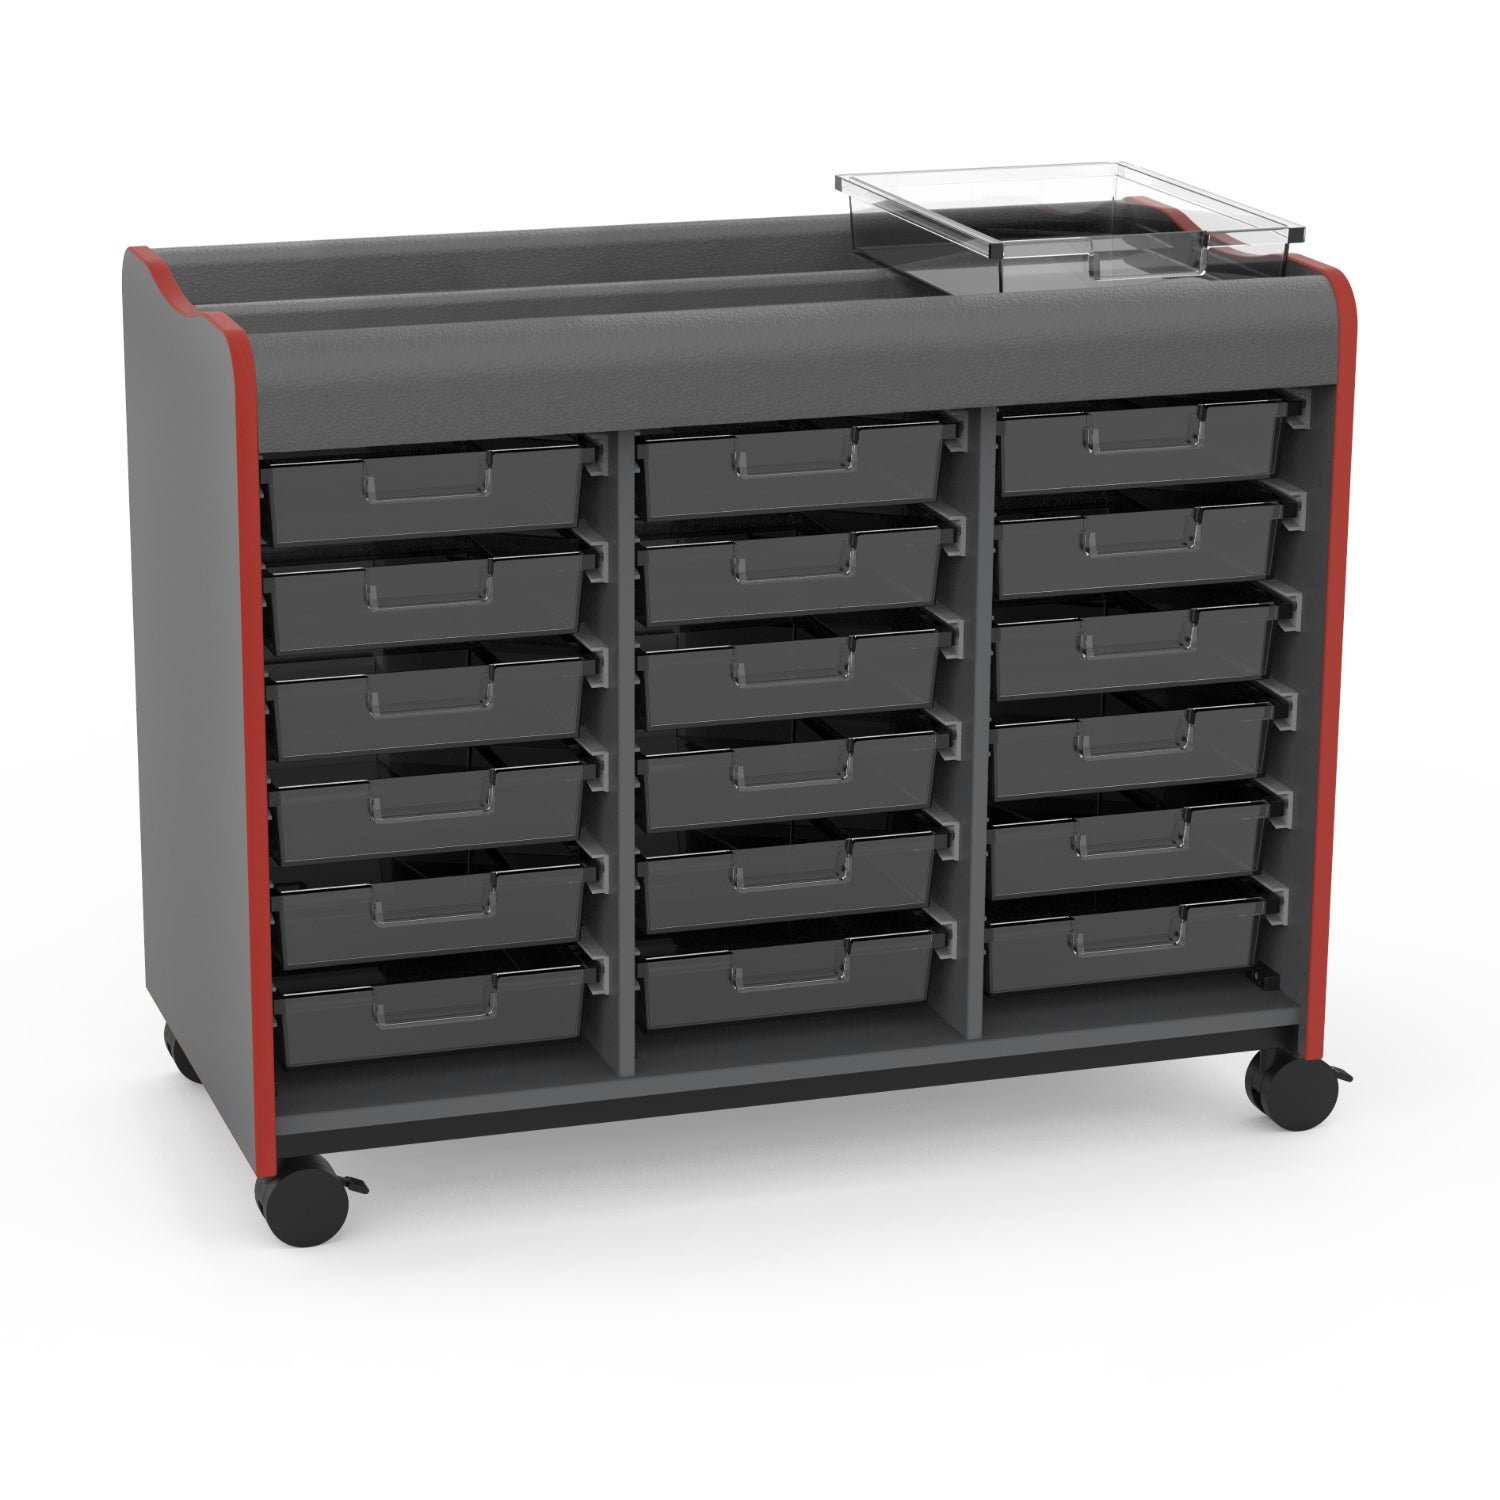 Horizon Makerspace Series 18-Tray Mobile Storage Cart